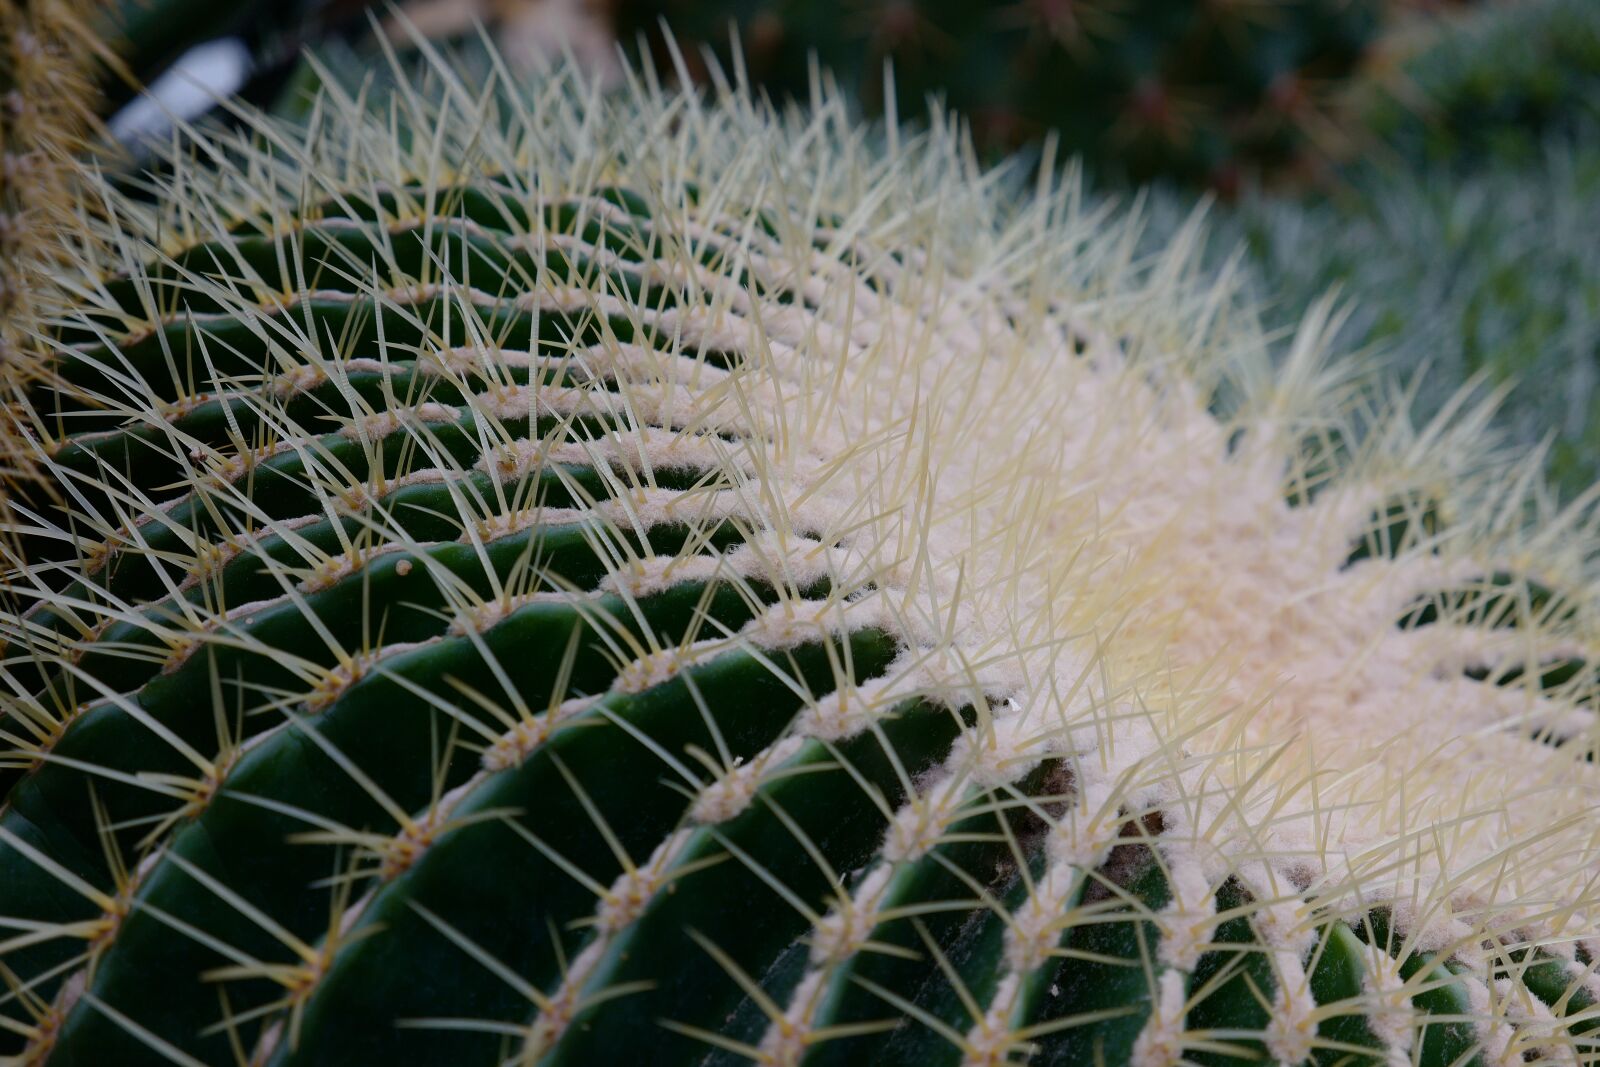 Vario-Elmar TL 1:3.5-5.6 / 18-56 ASPH. sample photo. Cactus, plant, nature photography